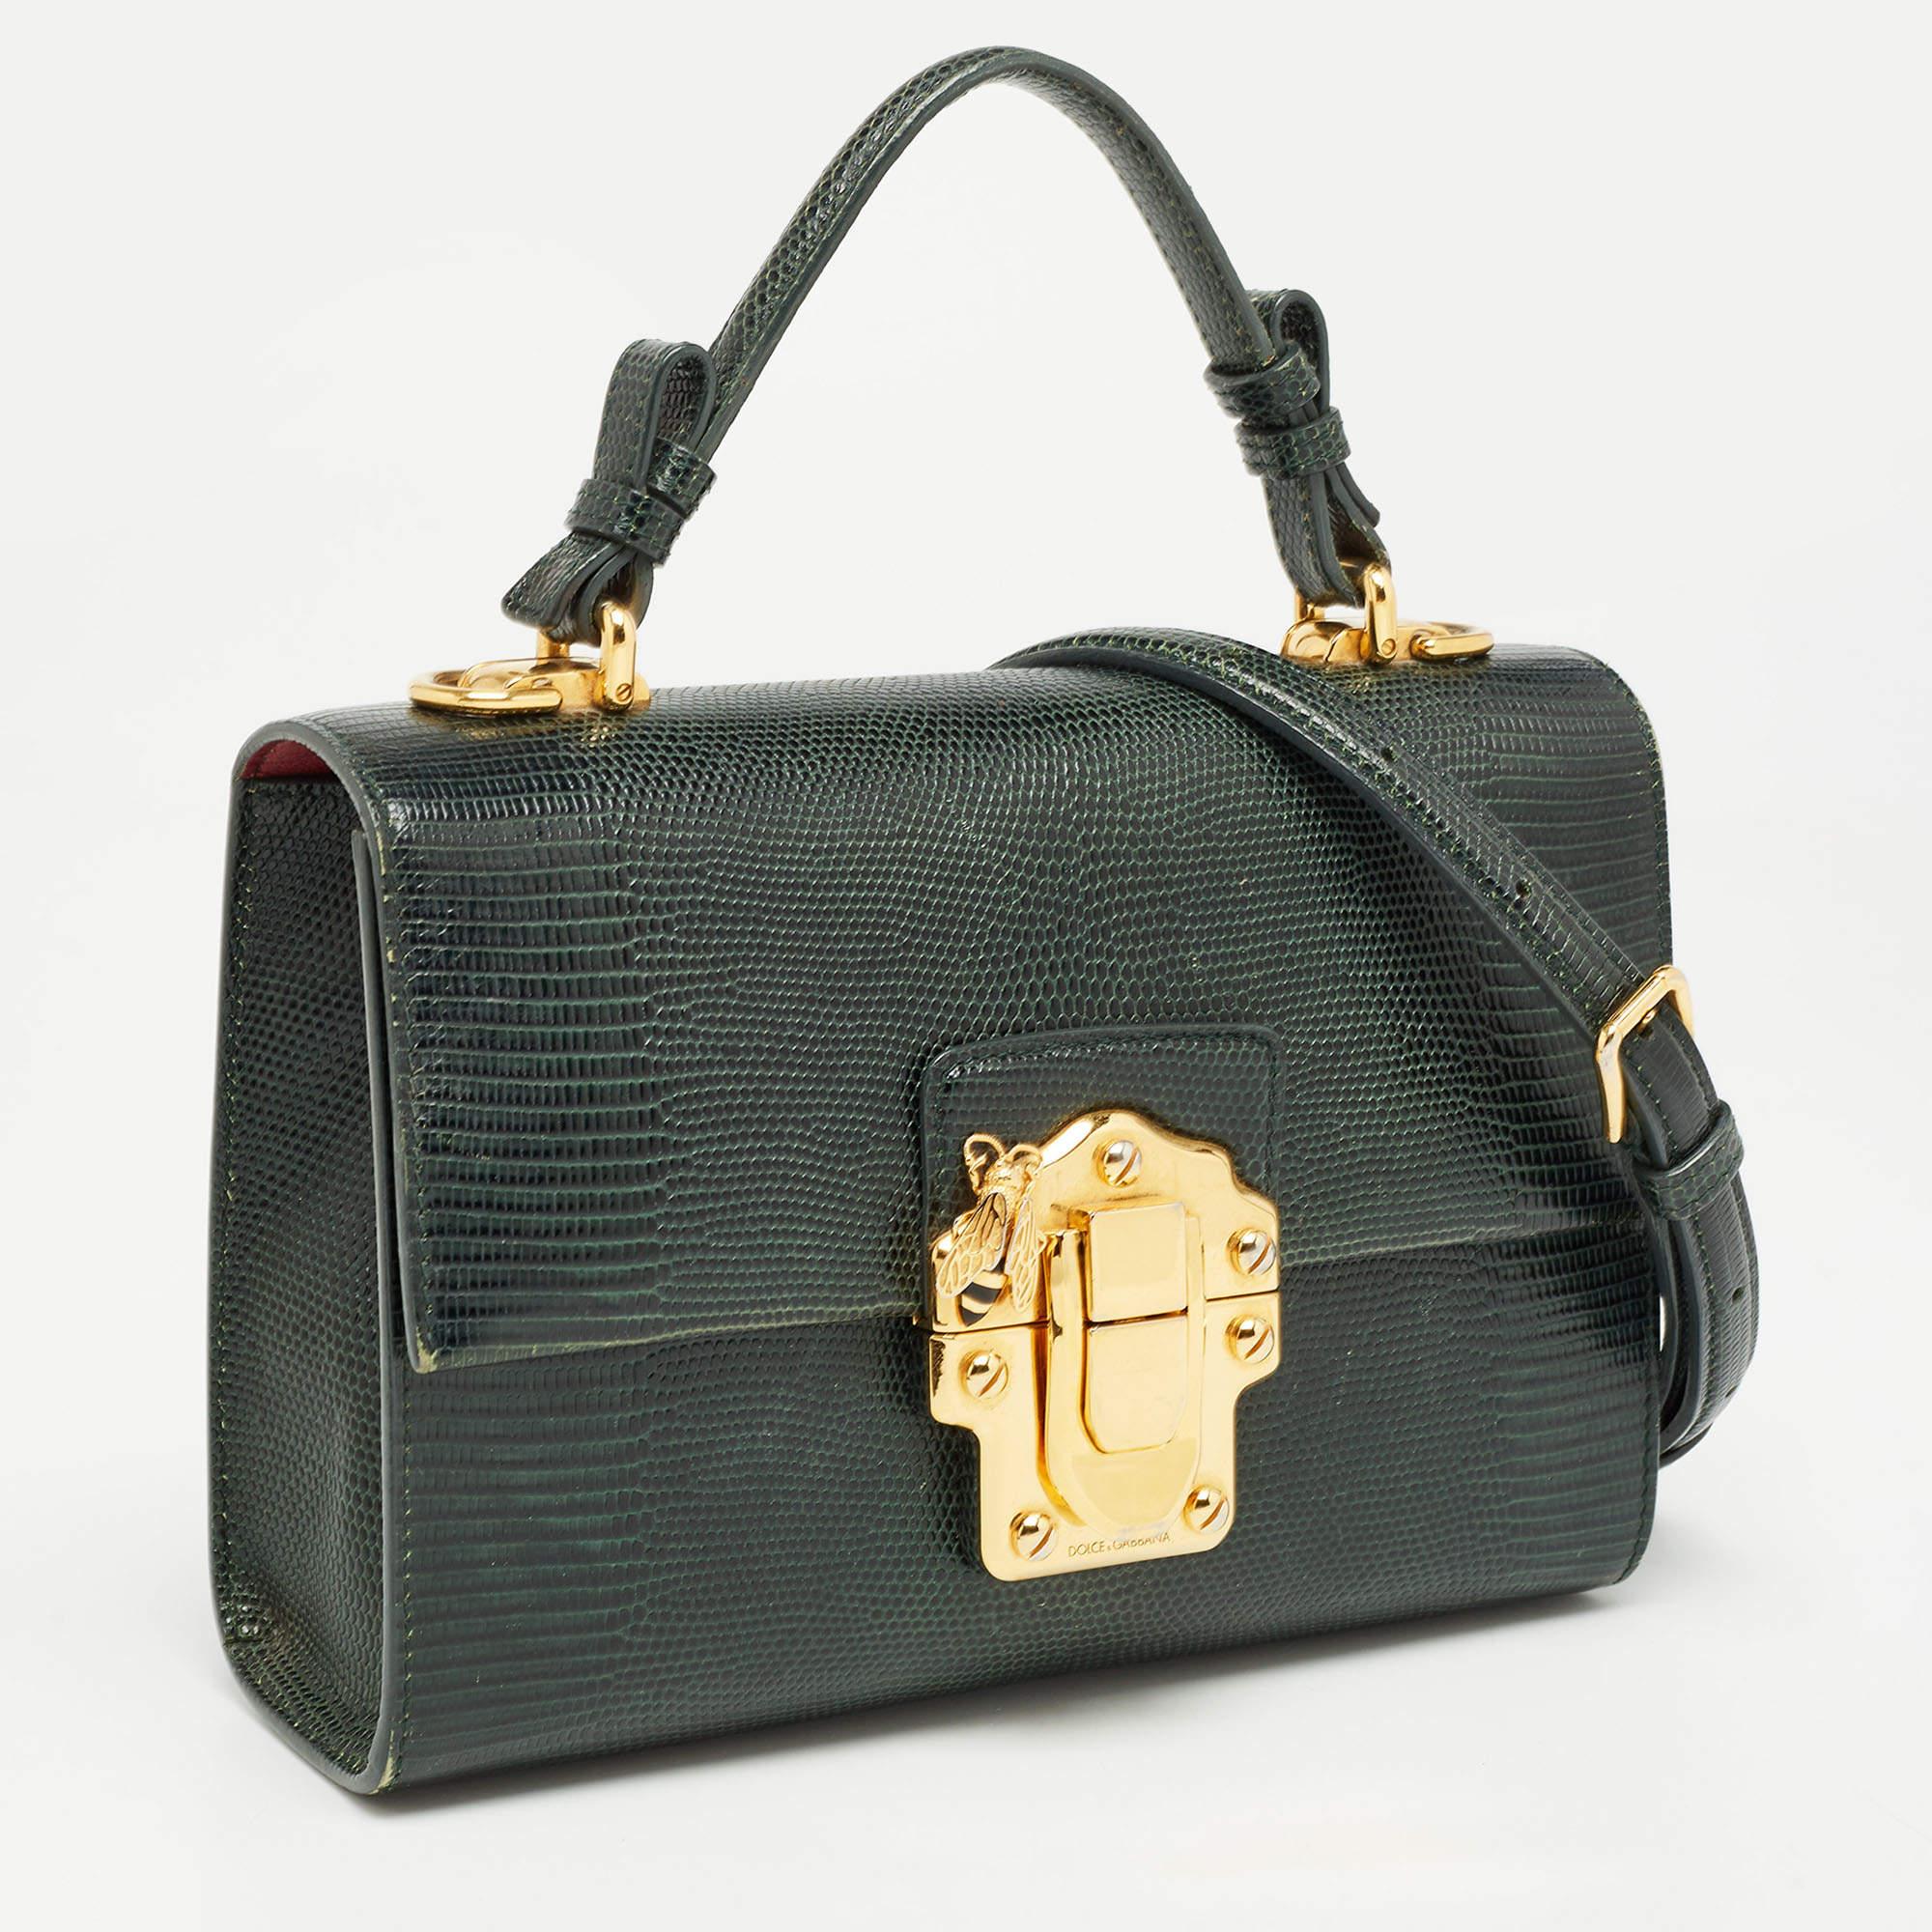 Dolce & Gabbana Dark Green Lizard Embossed Leather Lucia Top Handle Bag 1